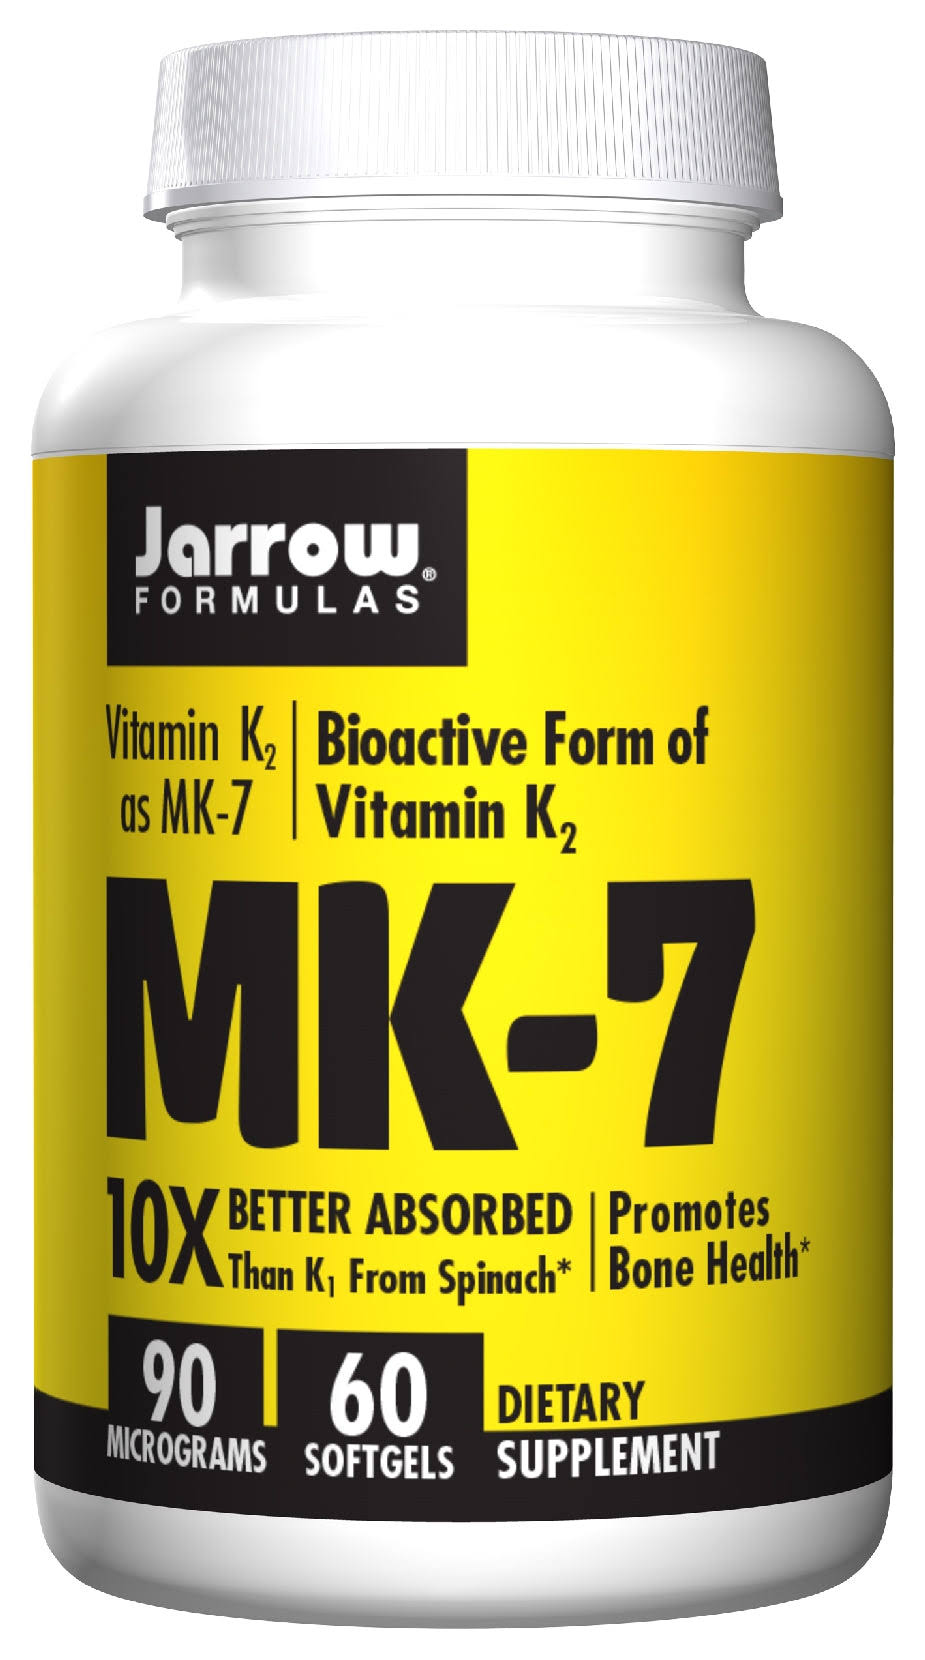 Jarrow Formulas Vitamin K-2 as MK-7 Supplement - 60 Softgels